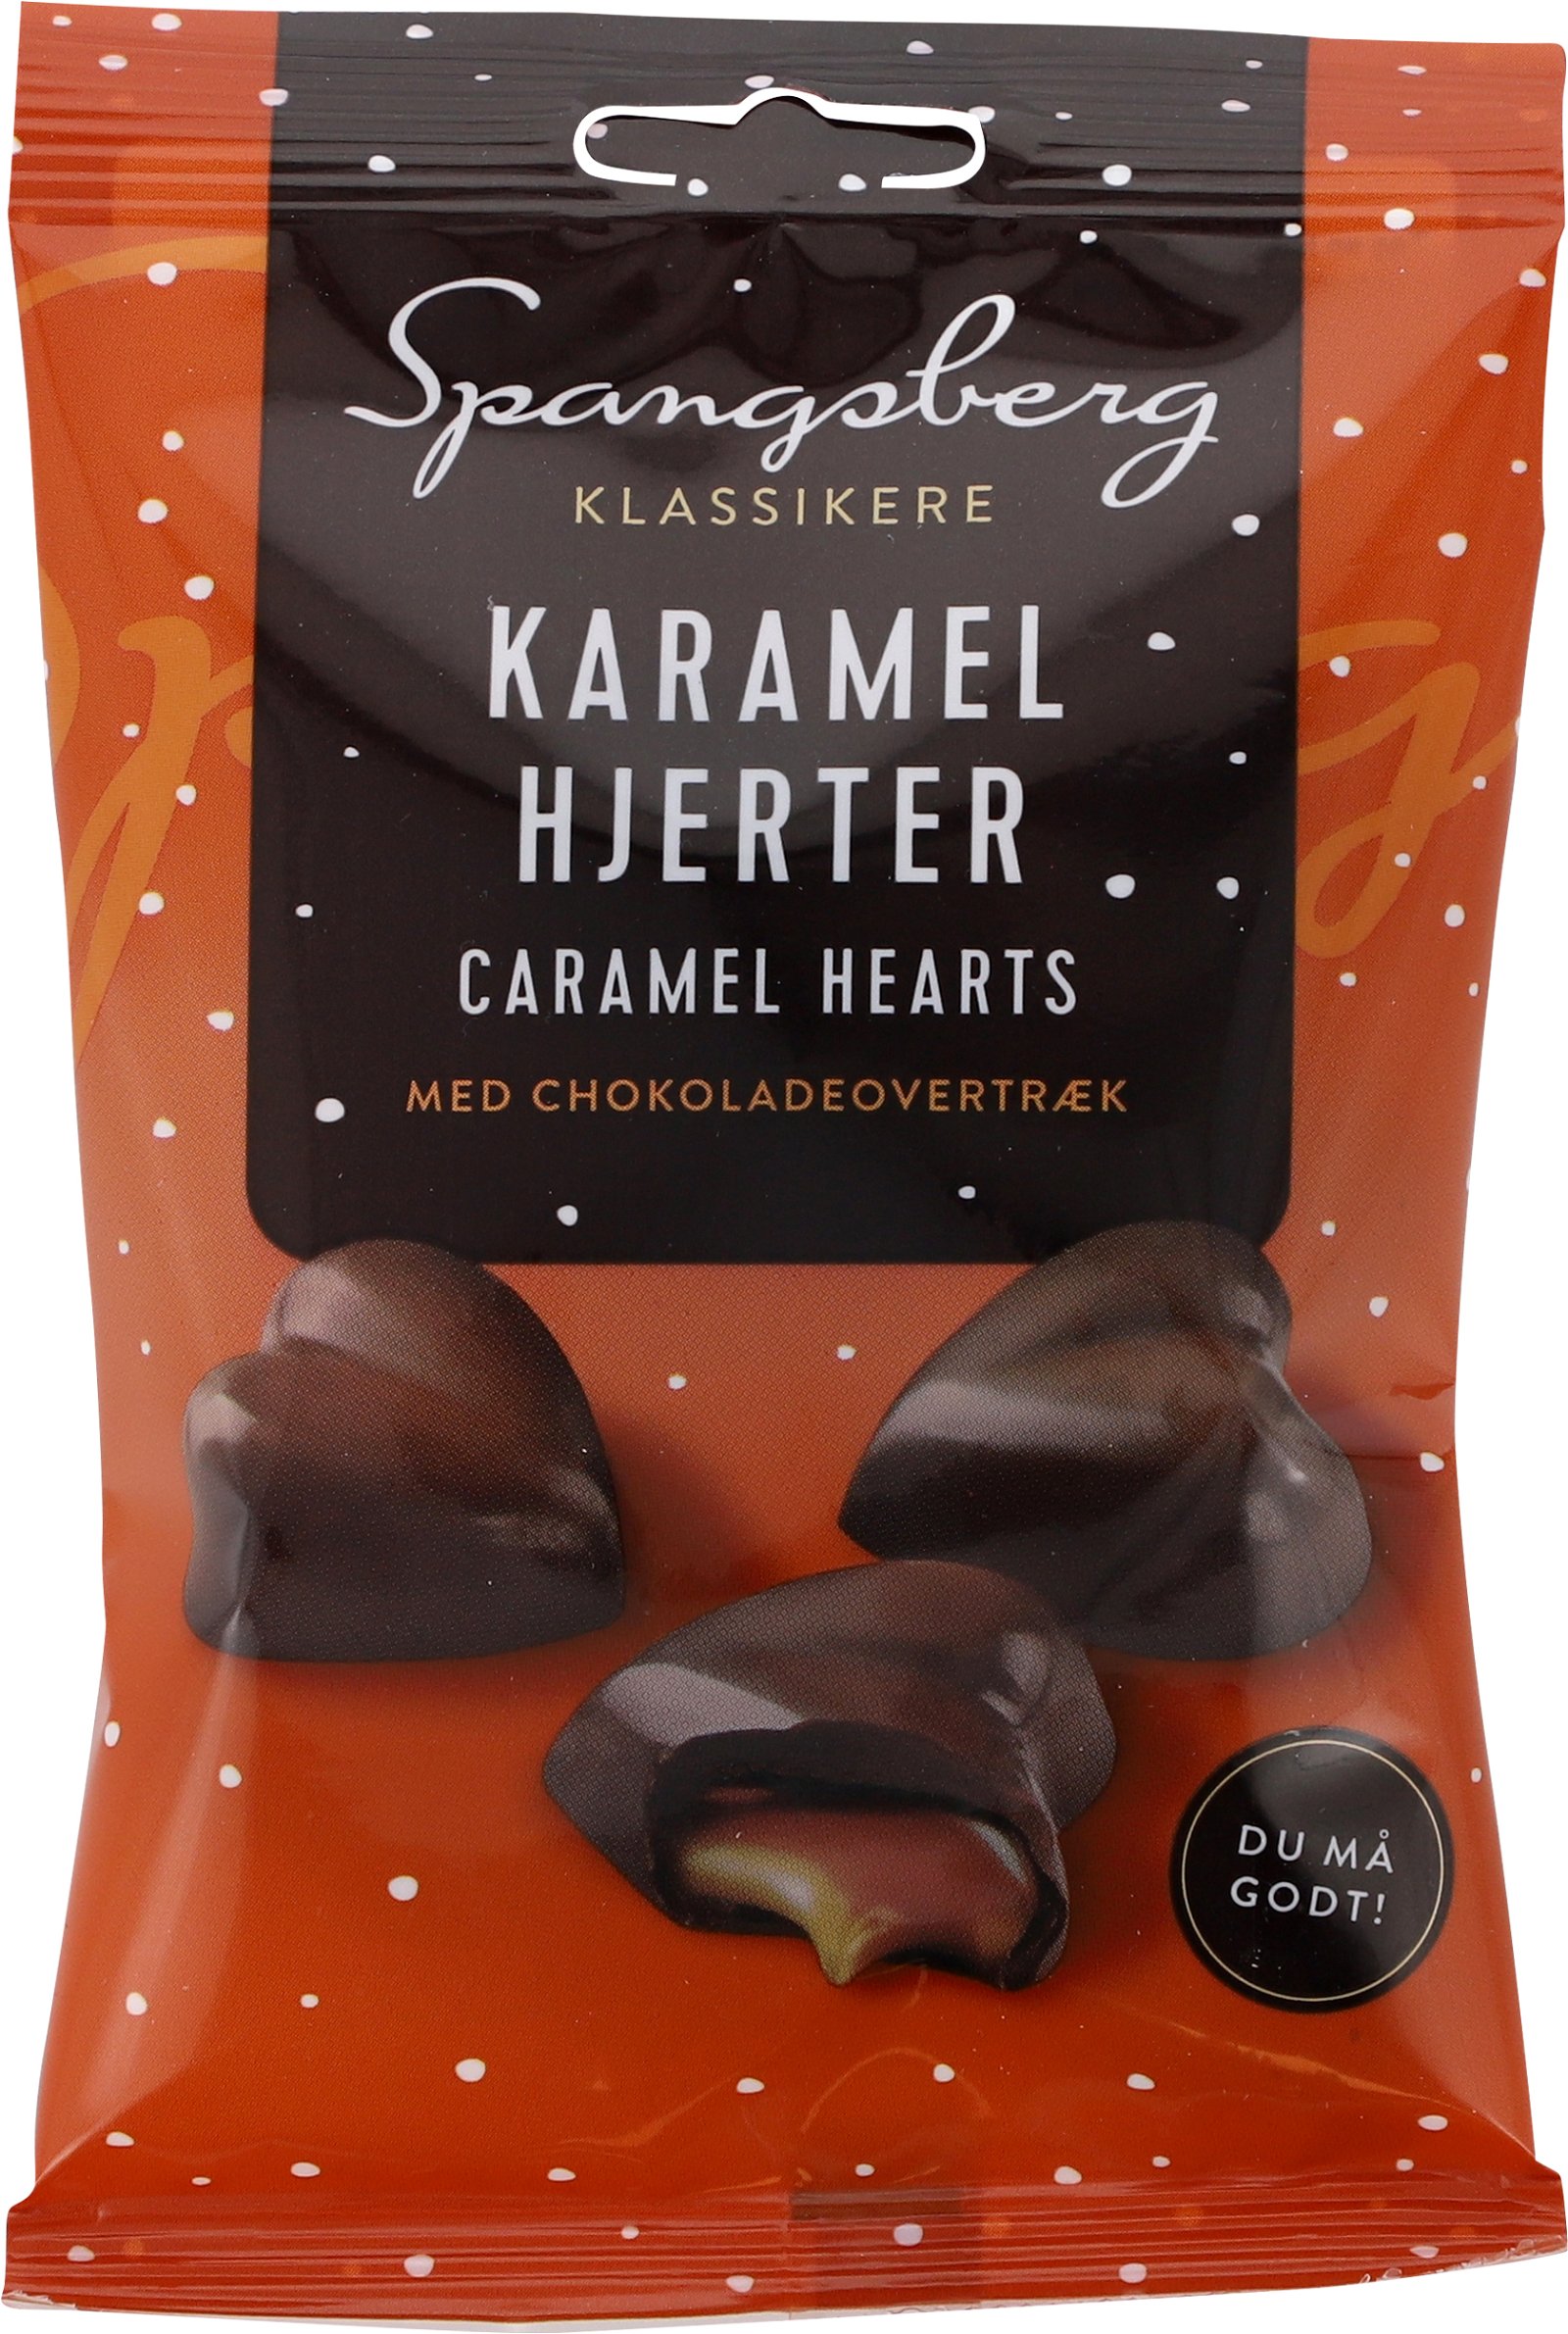 Spangsberg Caramel Hearts 250g